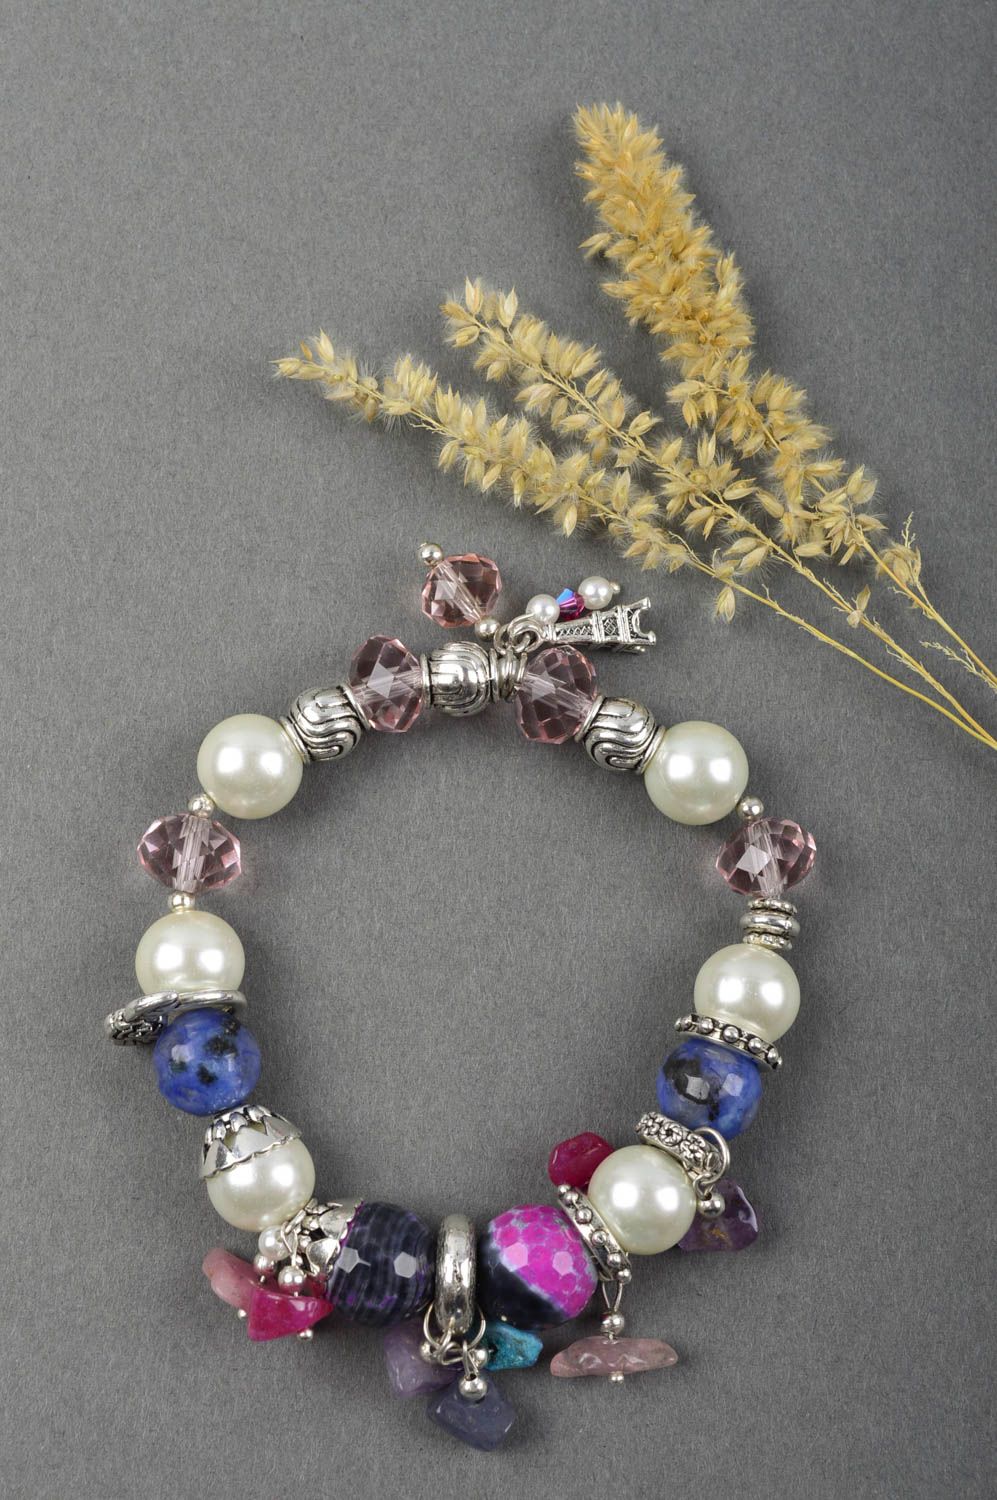 Beaded handmade wrist bracelet agate and crystals beautiful designer accessory photo 1